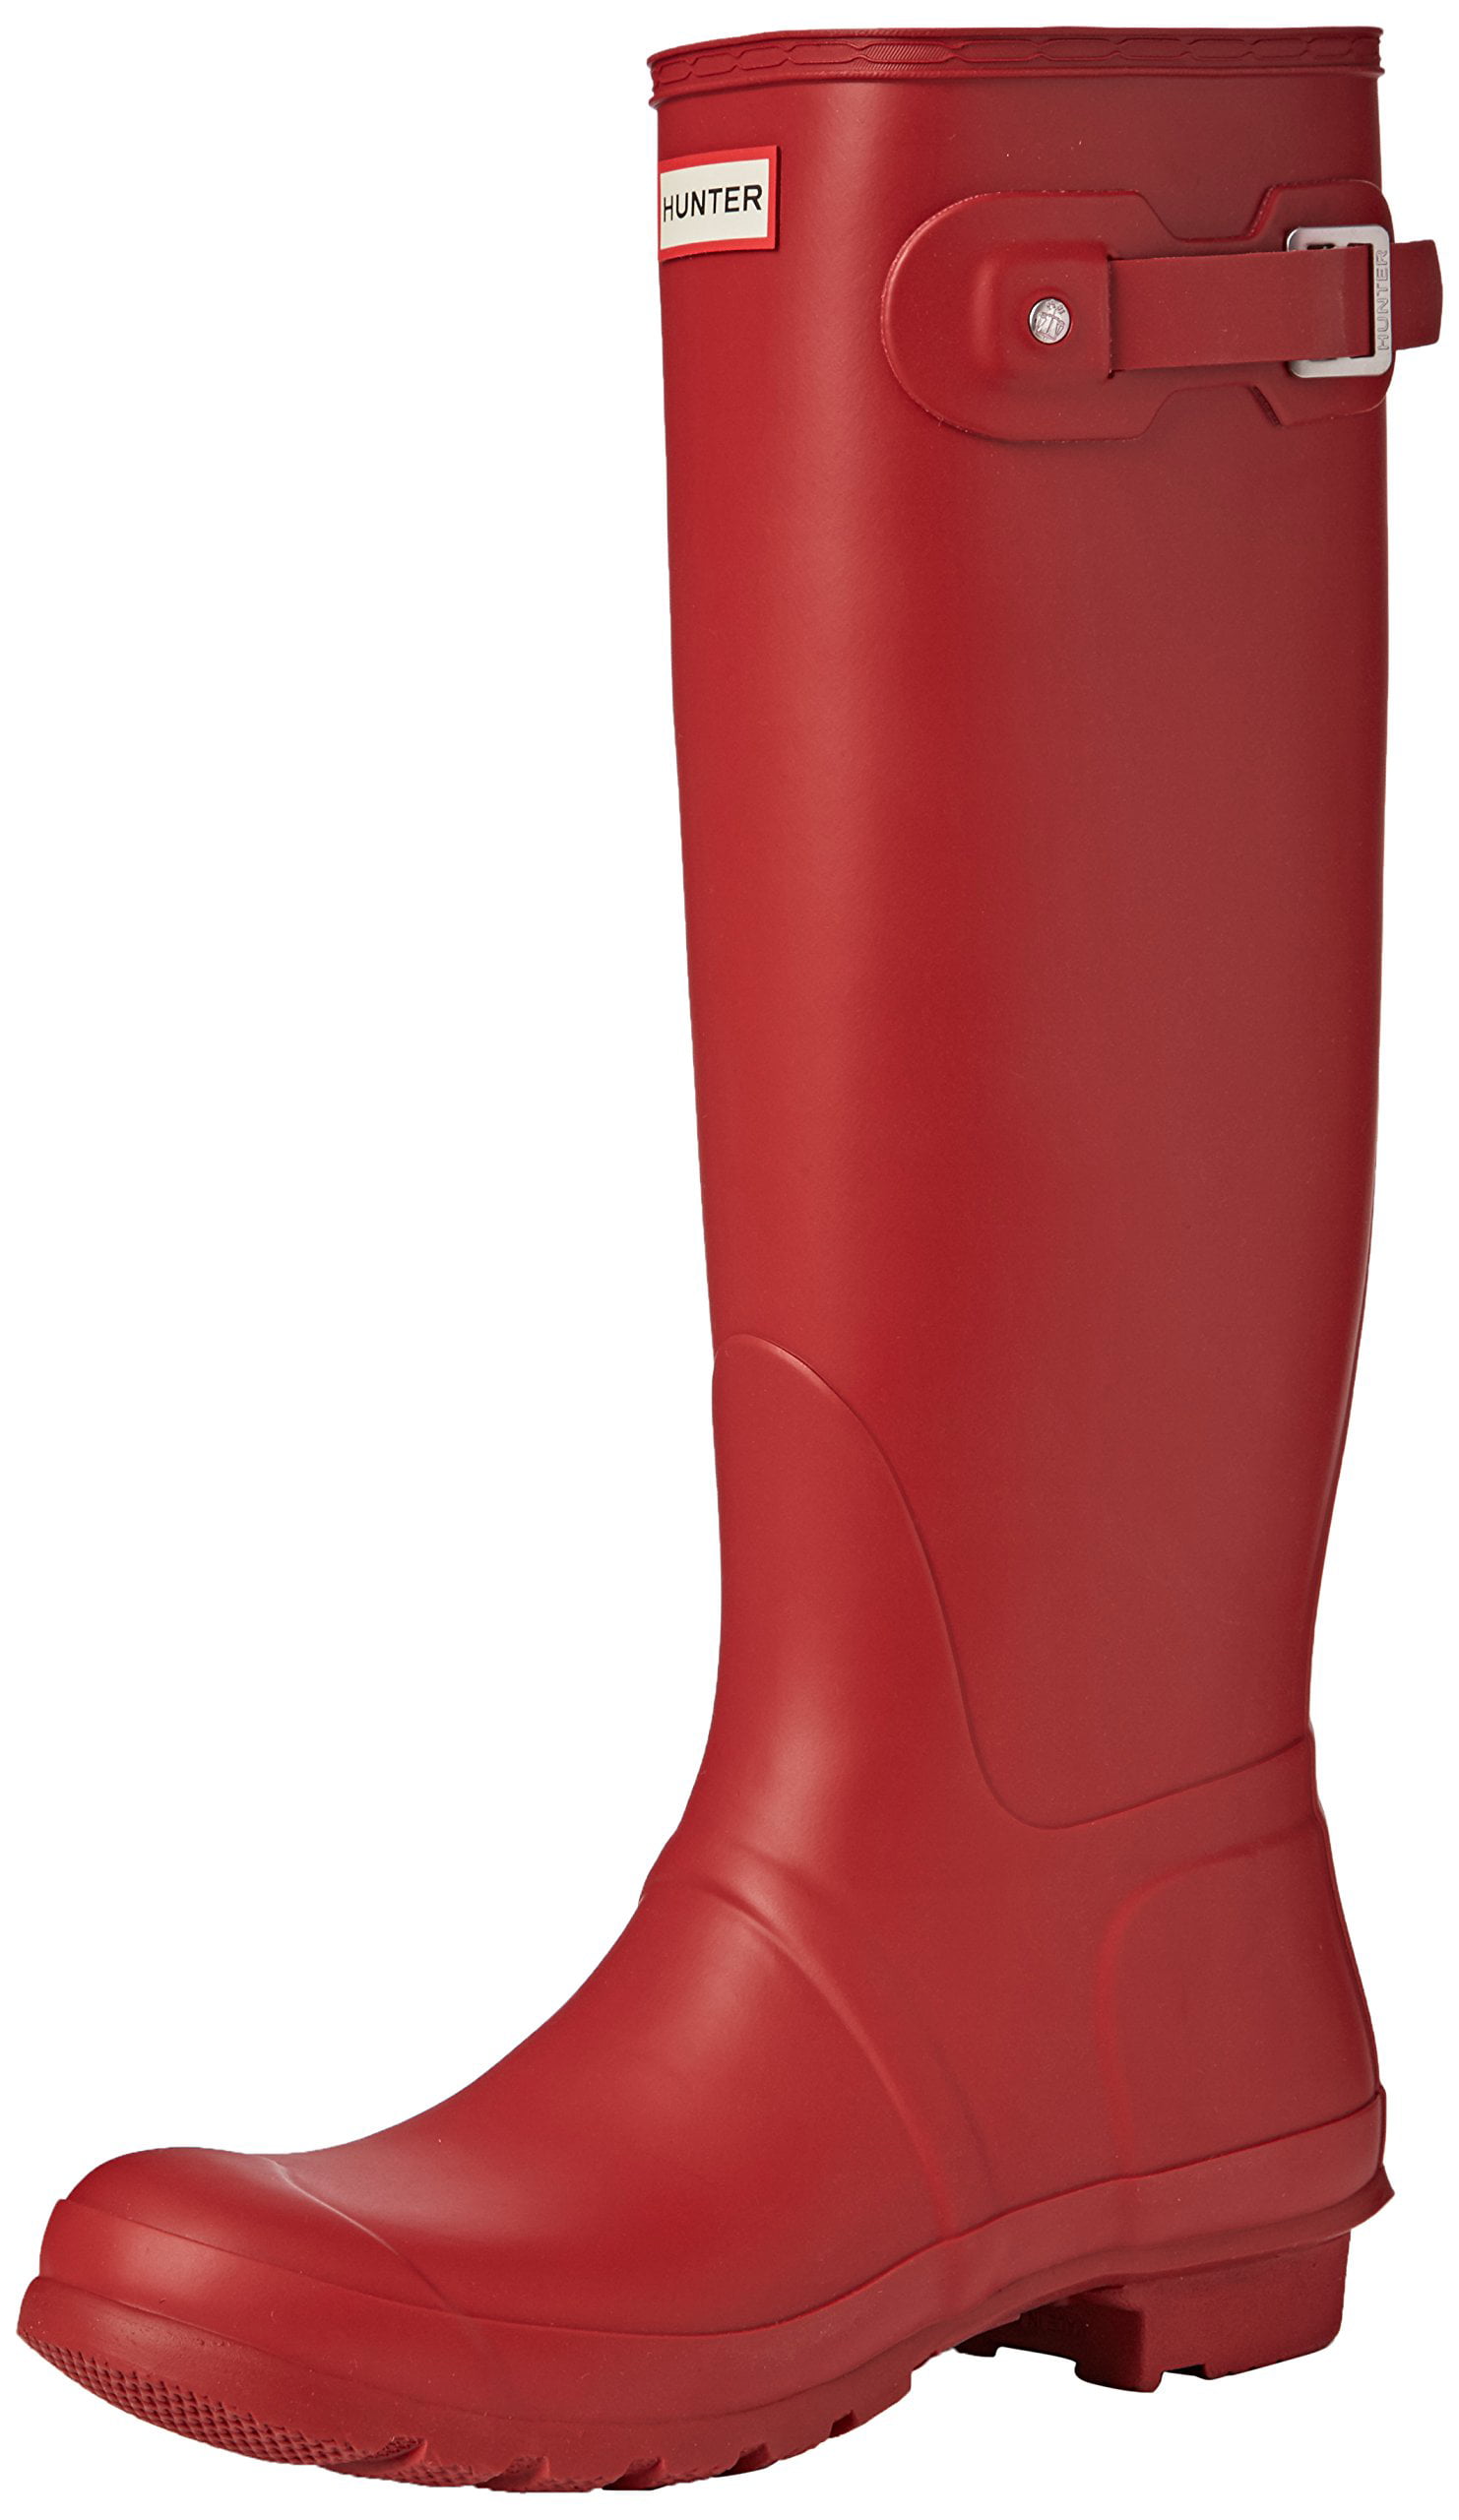 hunter women's tall rain boots